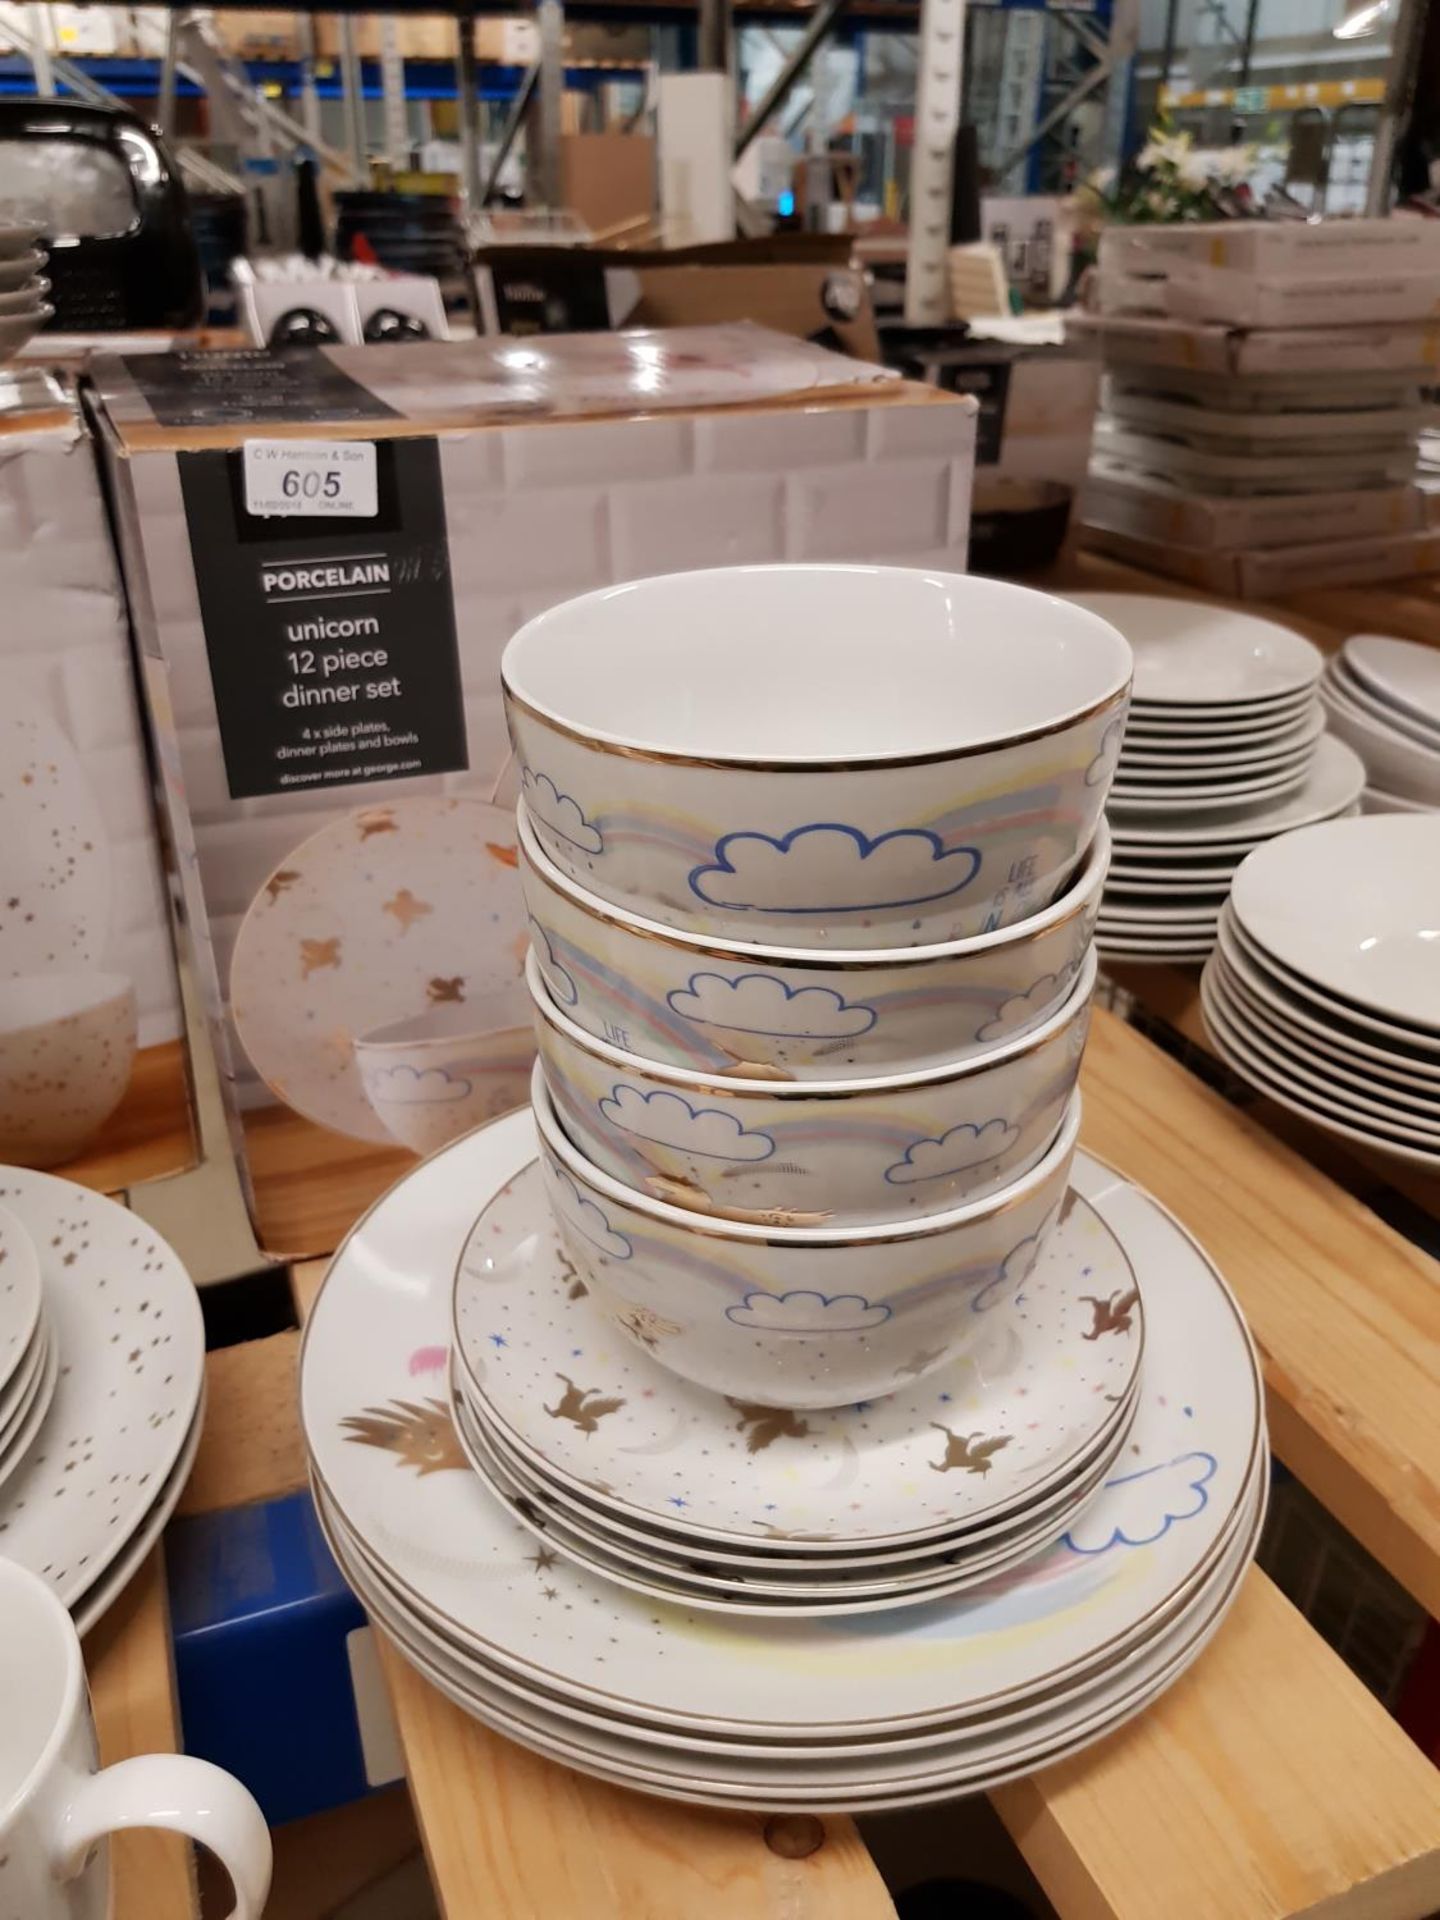 12 Piece Porcelain Unicorn Dinner Set